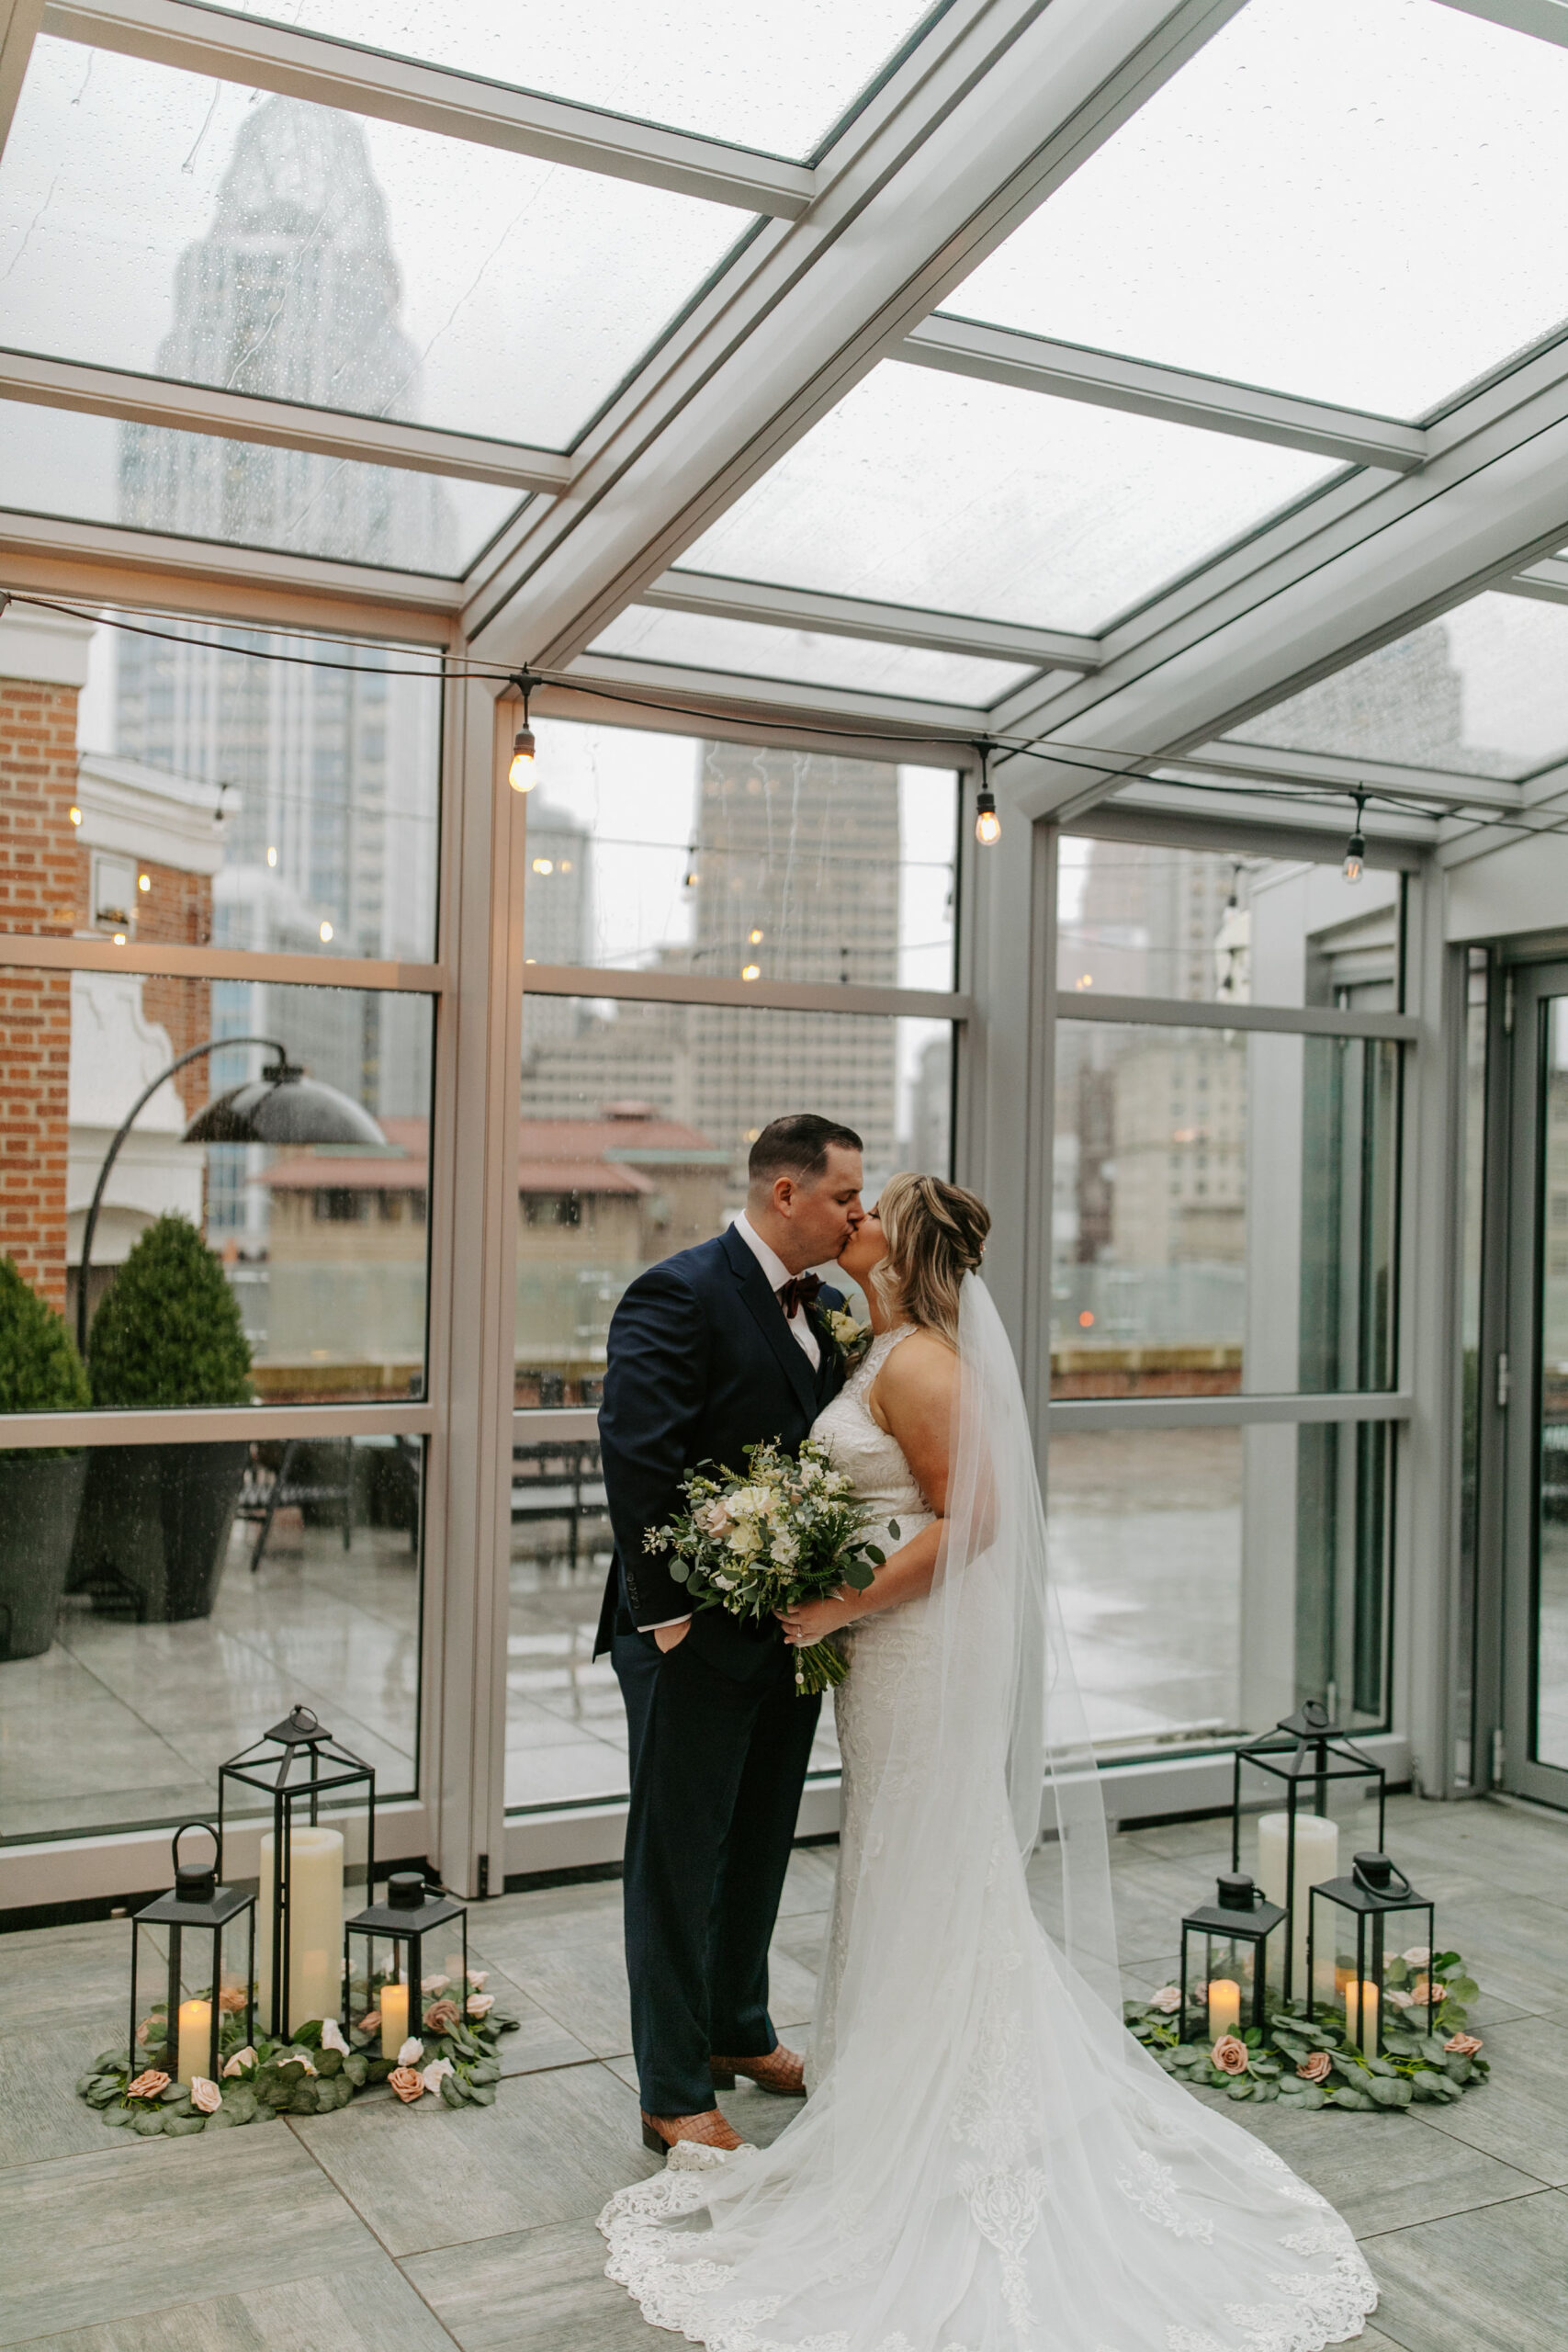 Rooftop City Wedding Ceremony at the Lyle Park Hotel in Cincinnati Ohio. 